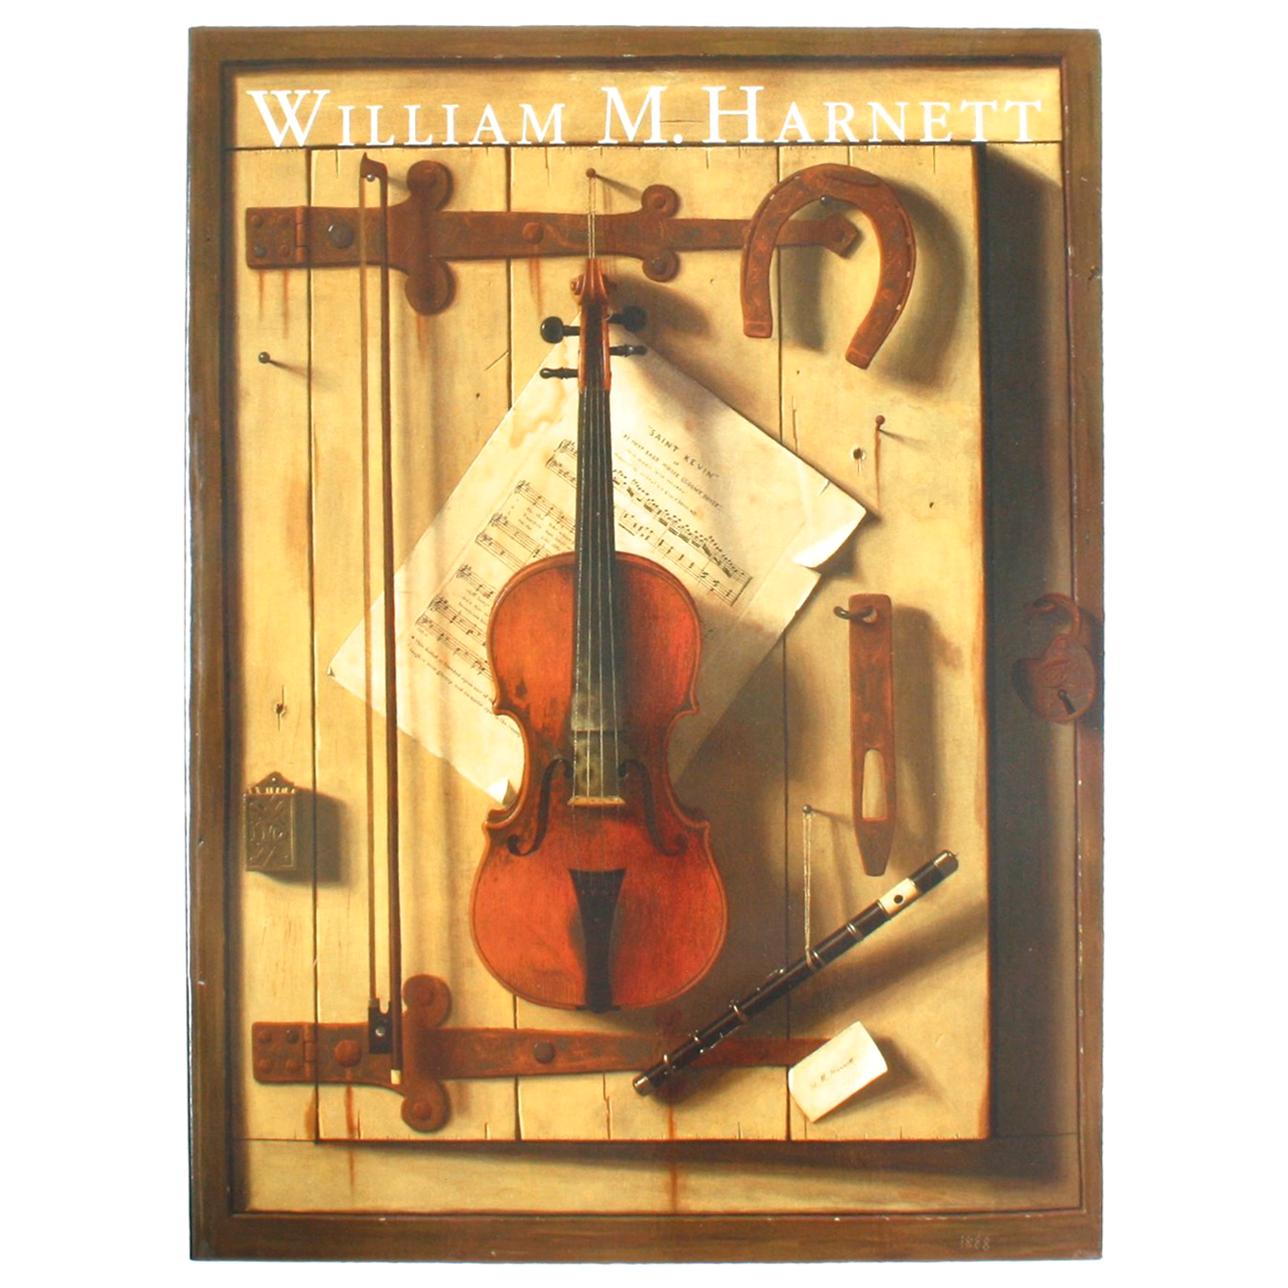 William M. Harnett, First Edition Exhibition Catalogue